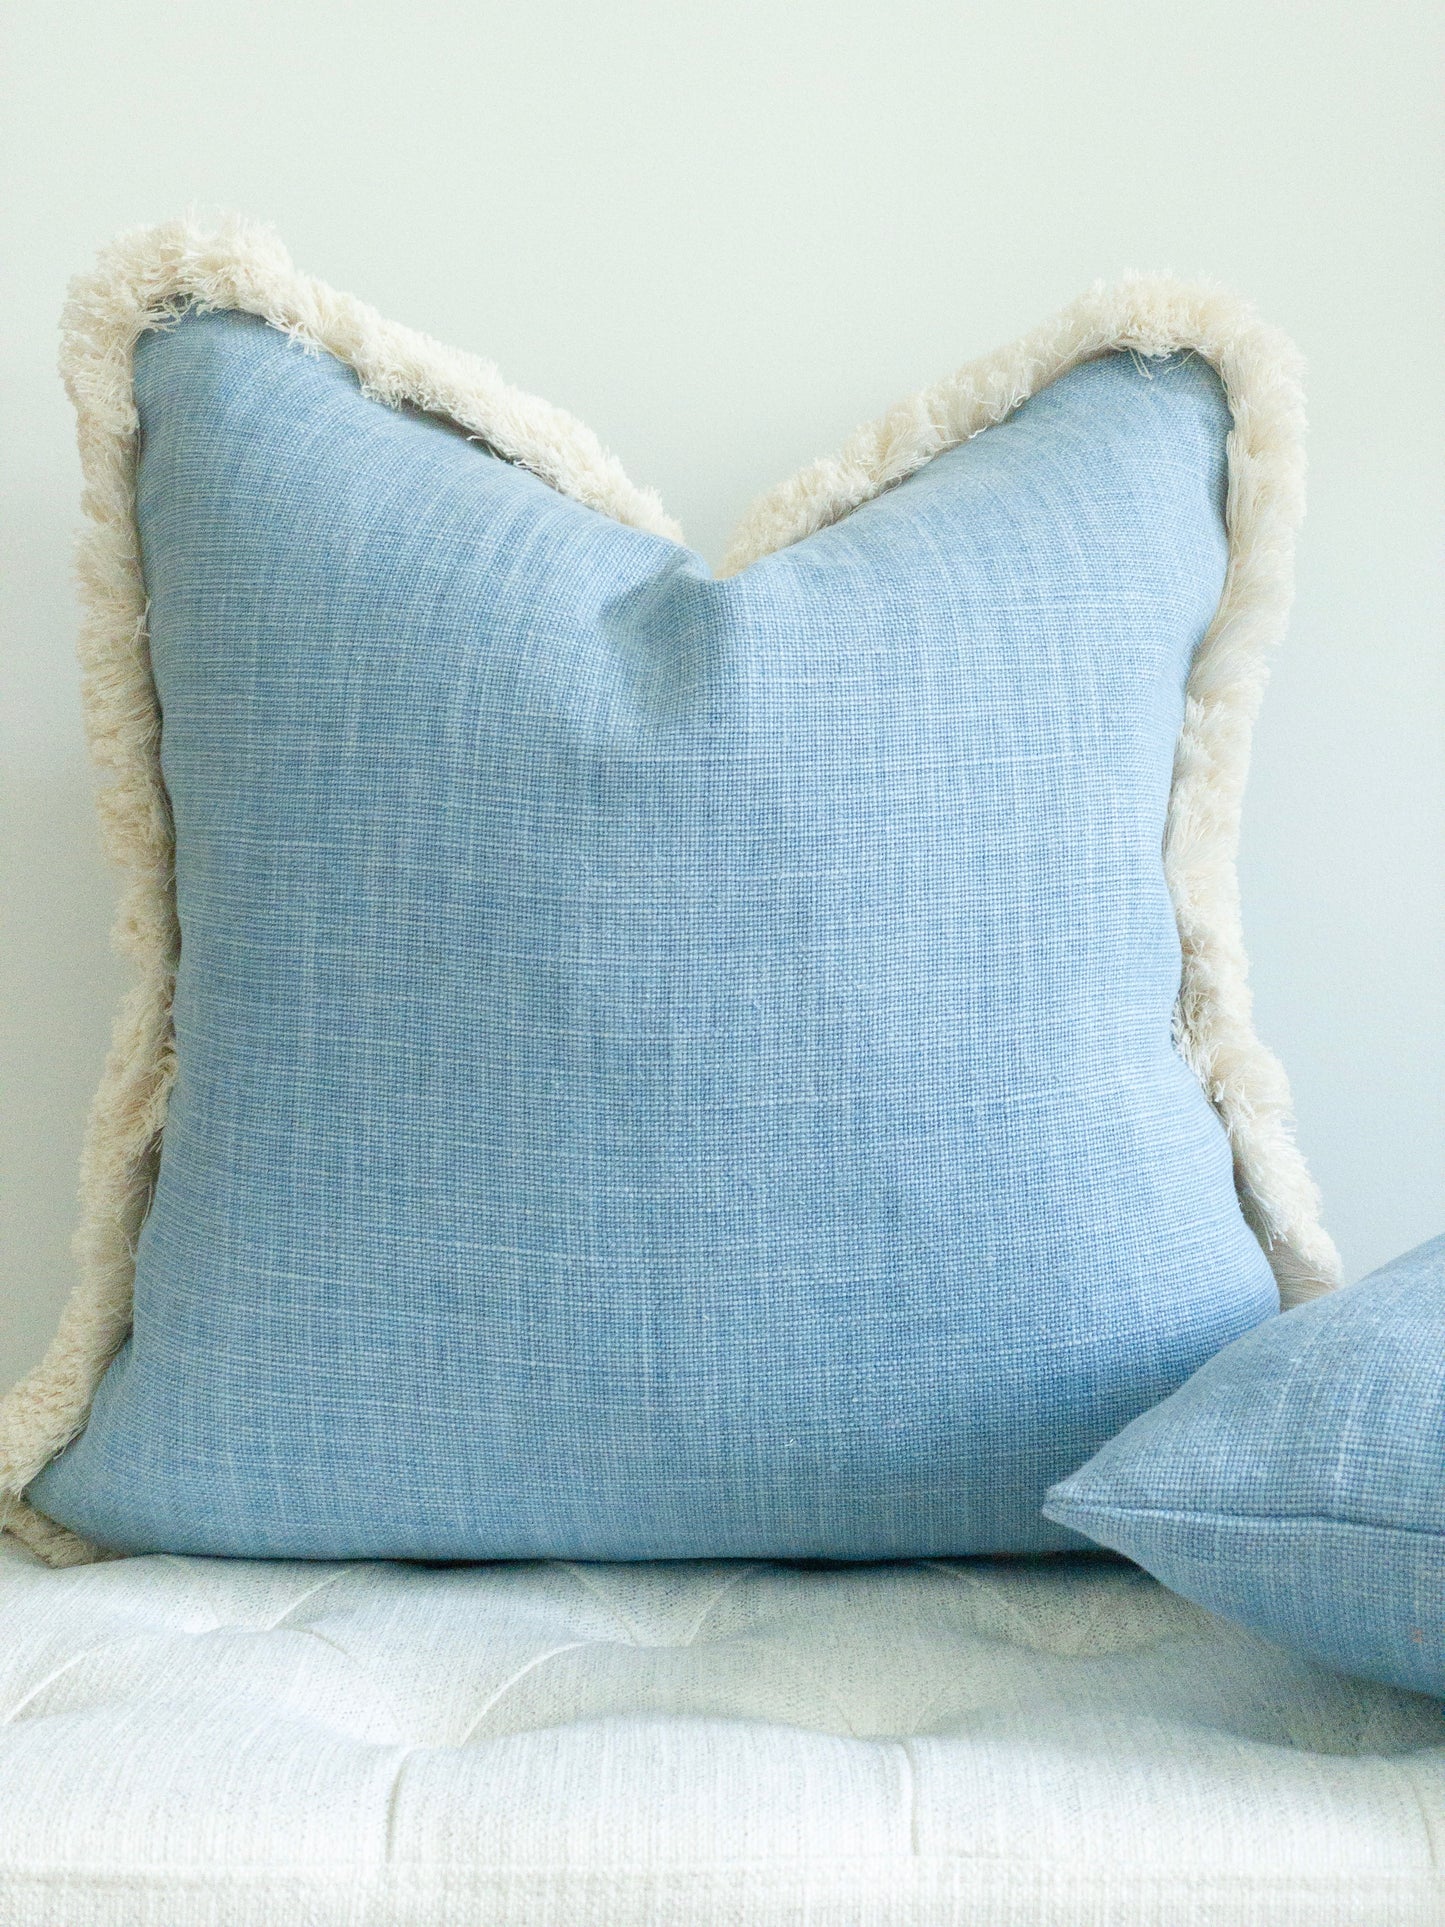 Light blue linen pillow with natural cotton brush fringe